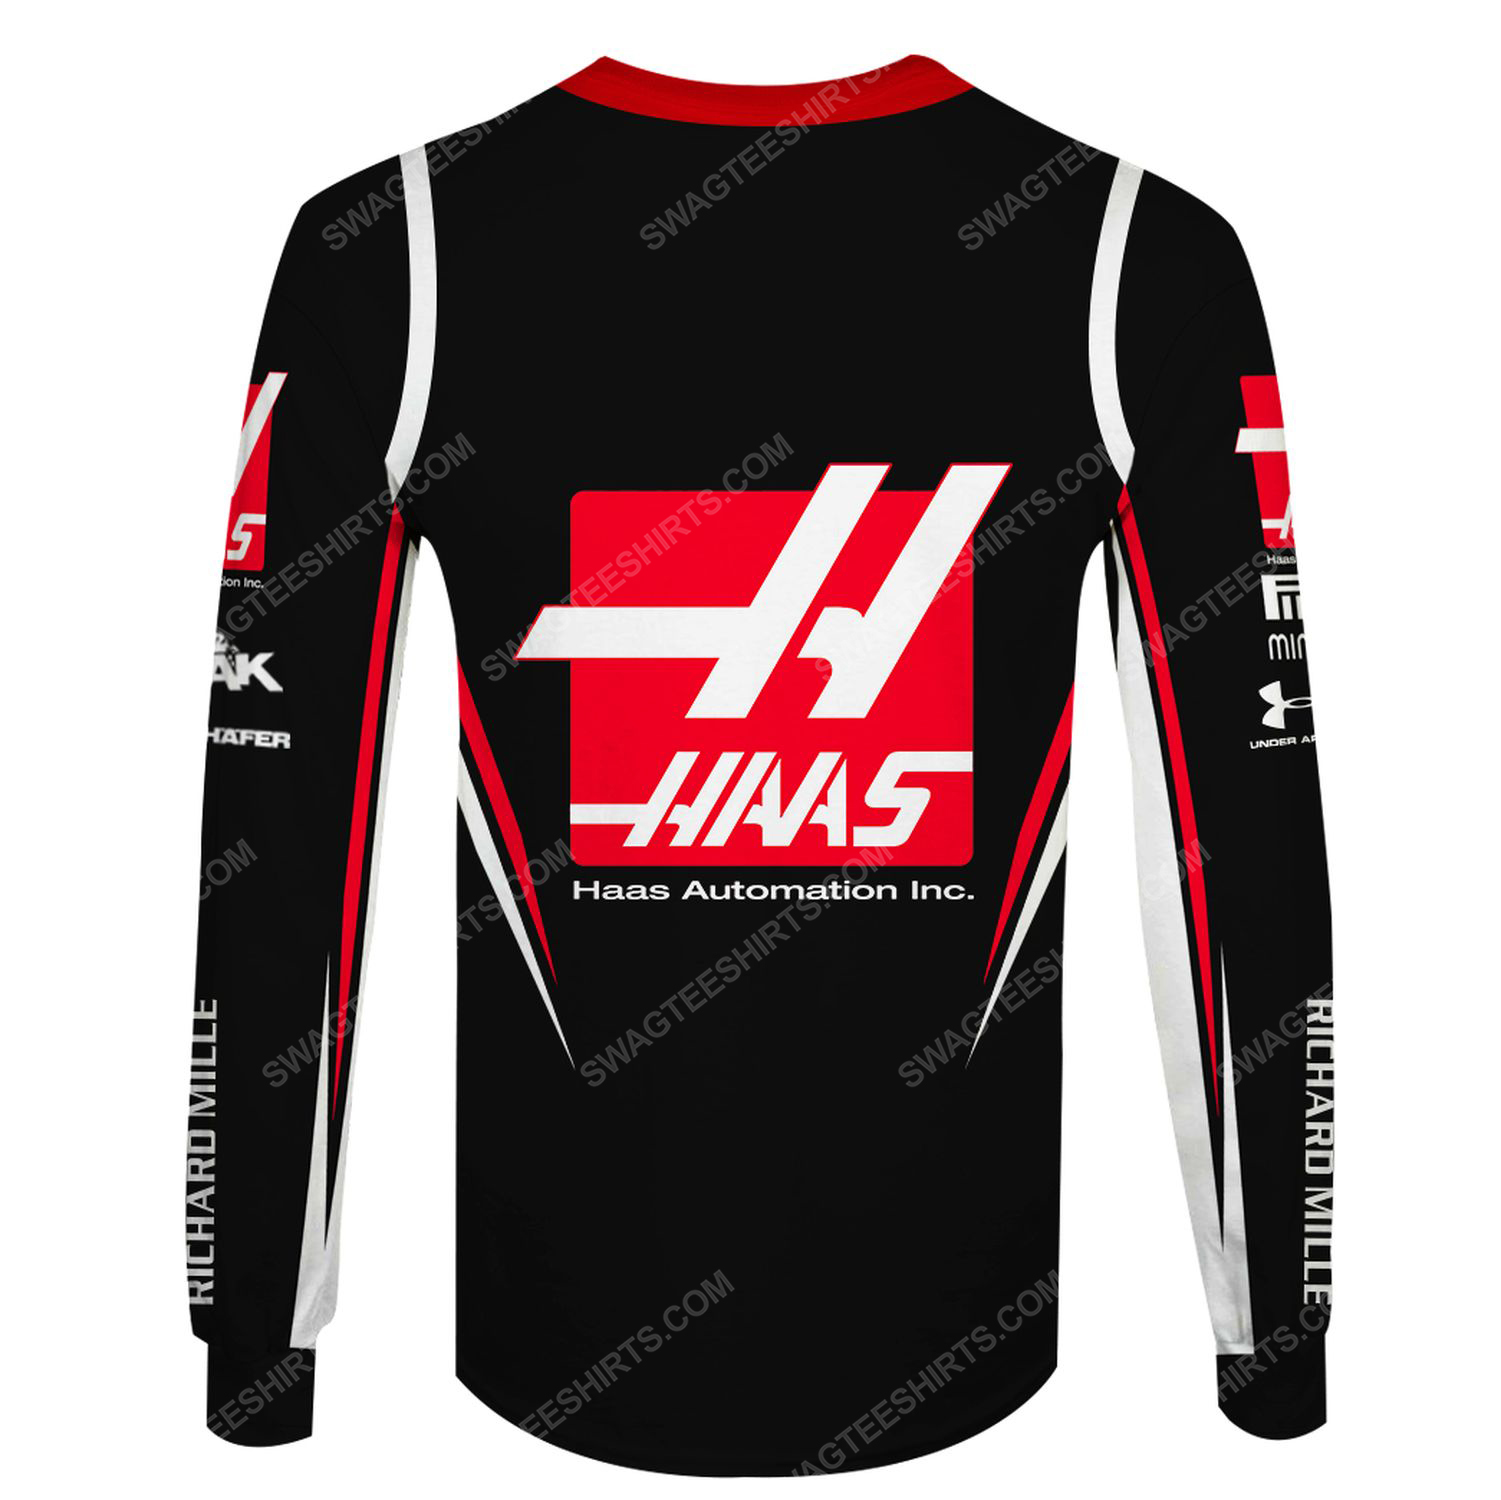 Haas automation inc racing team motorsport full printing sweatshirt - back